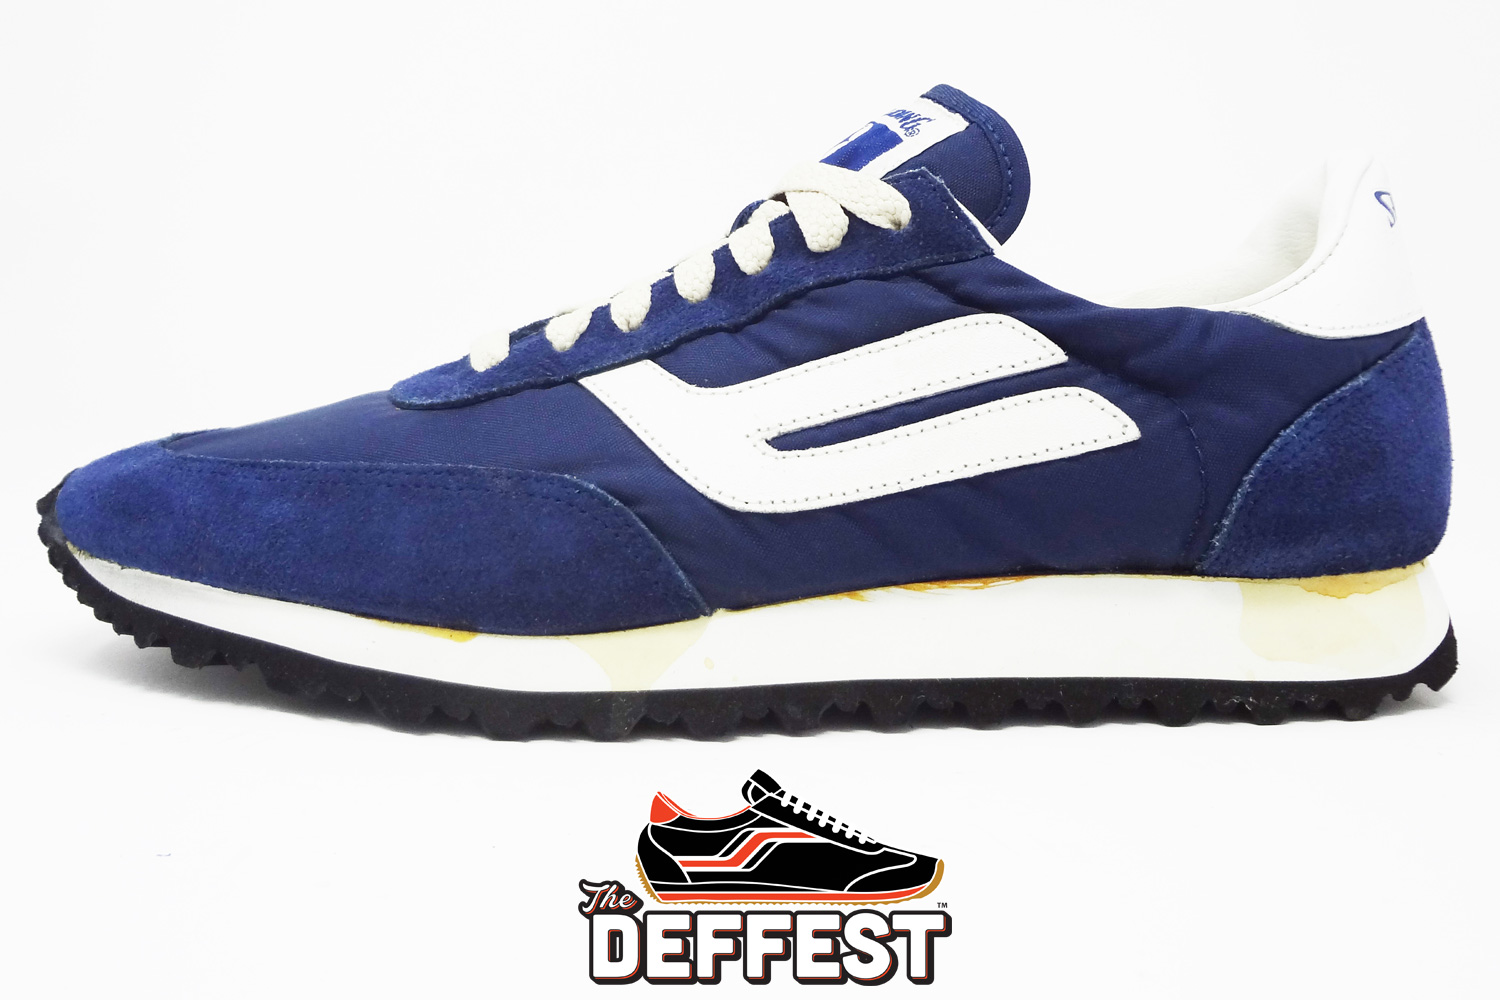 Spalding 80s vintage sneakers @ The Deffest